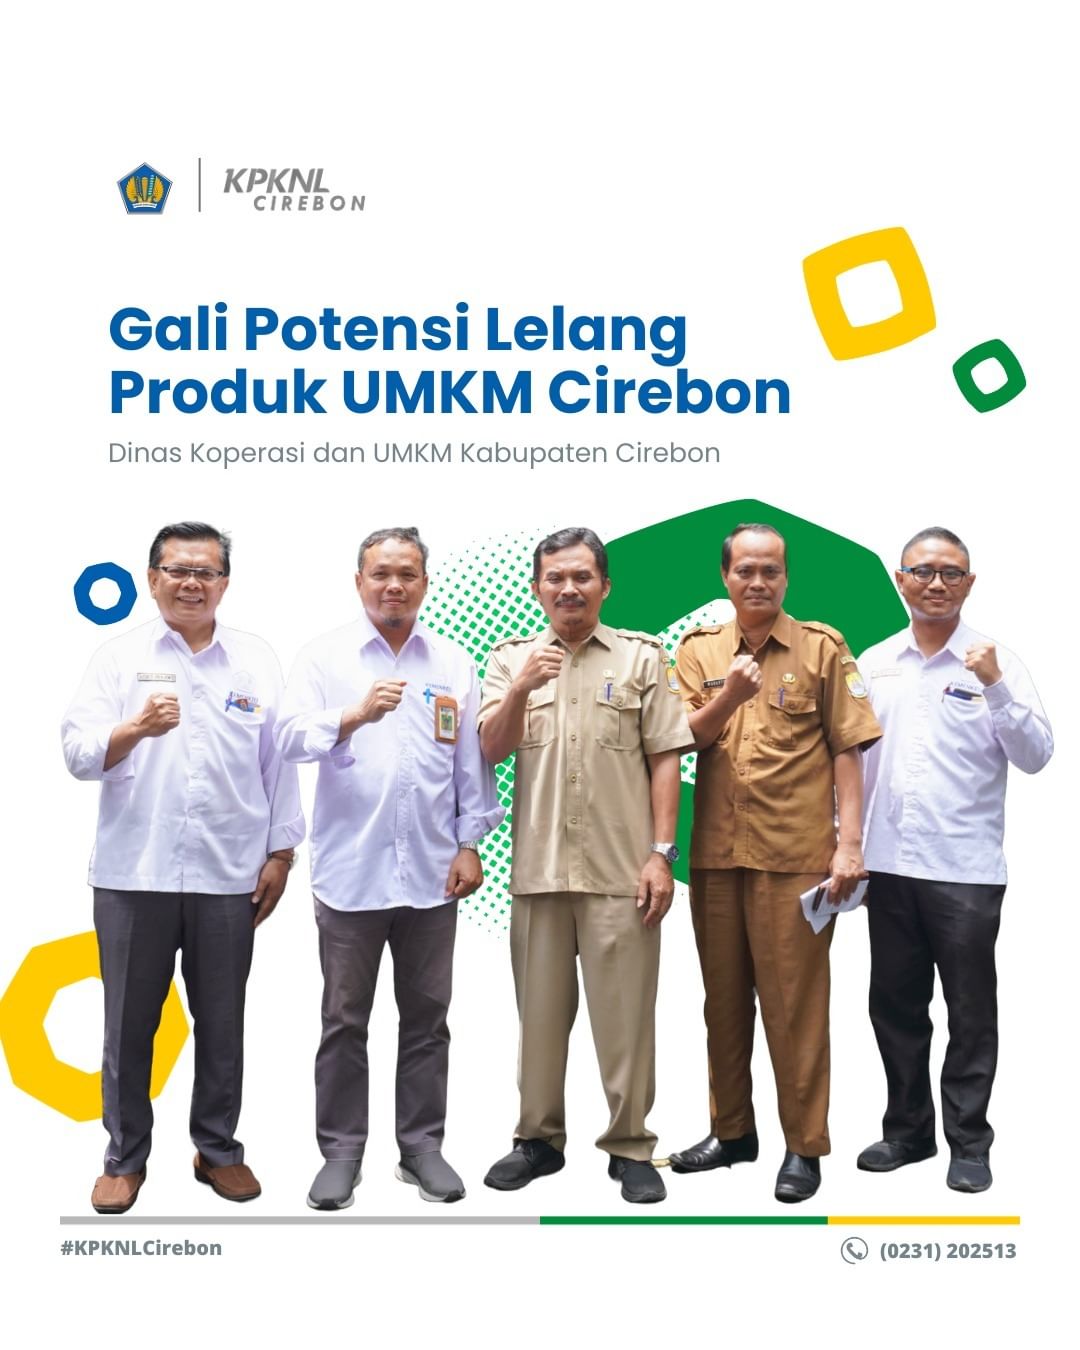 Gali Potensi Lelang Produk UMKM Dari Cirebon sampai Kuningan